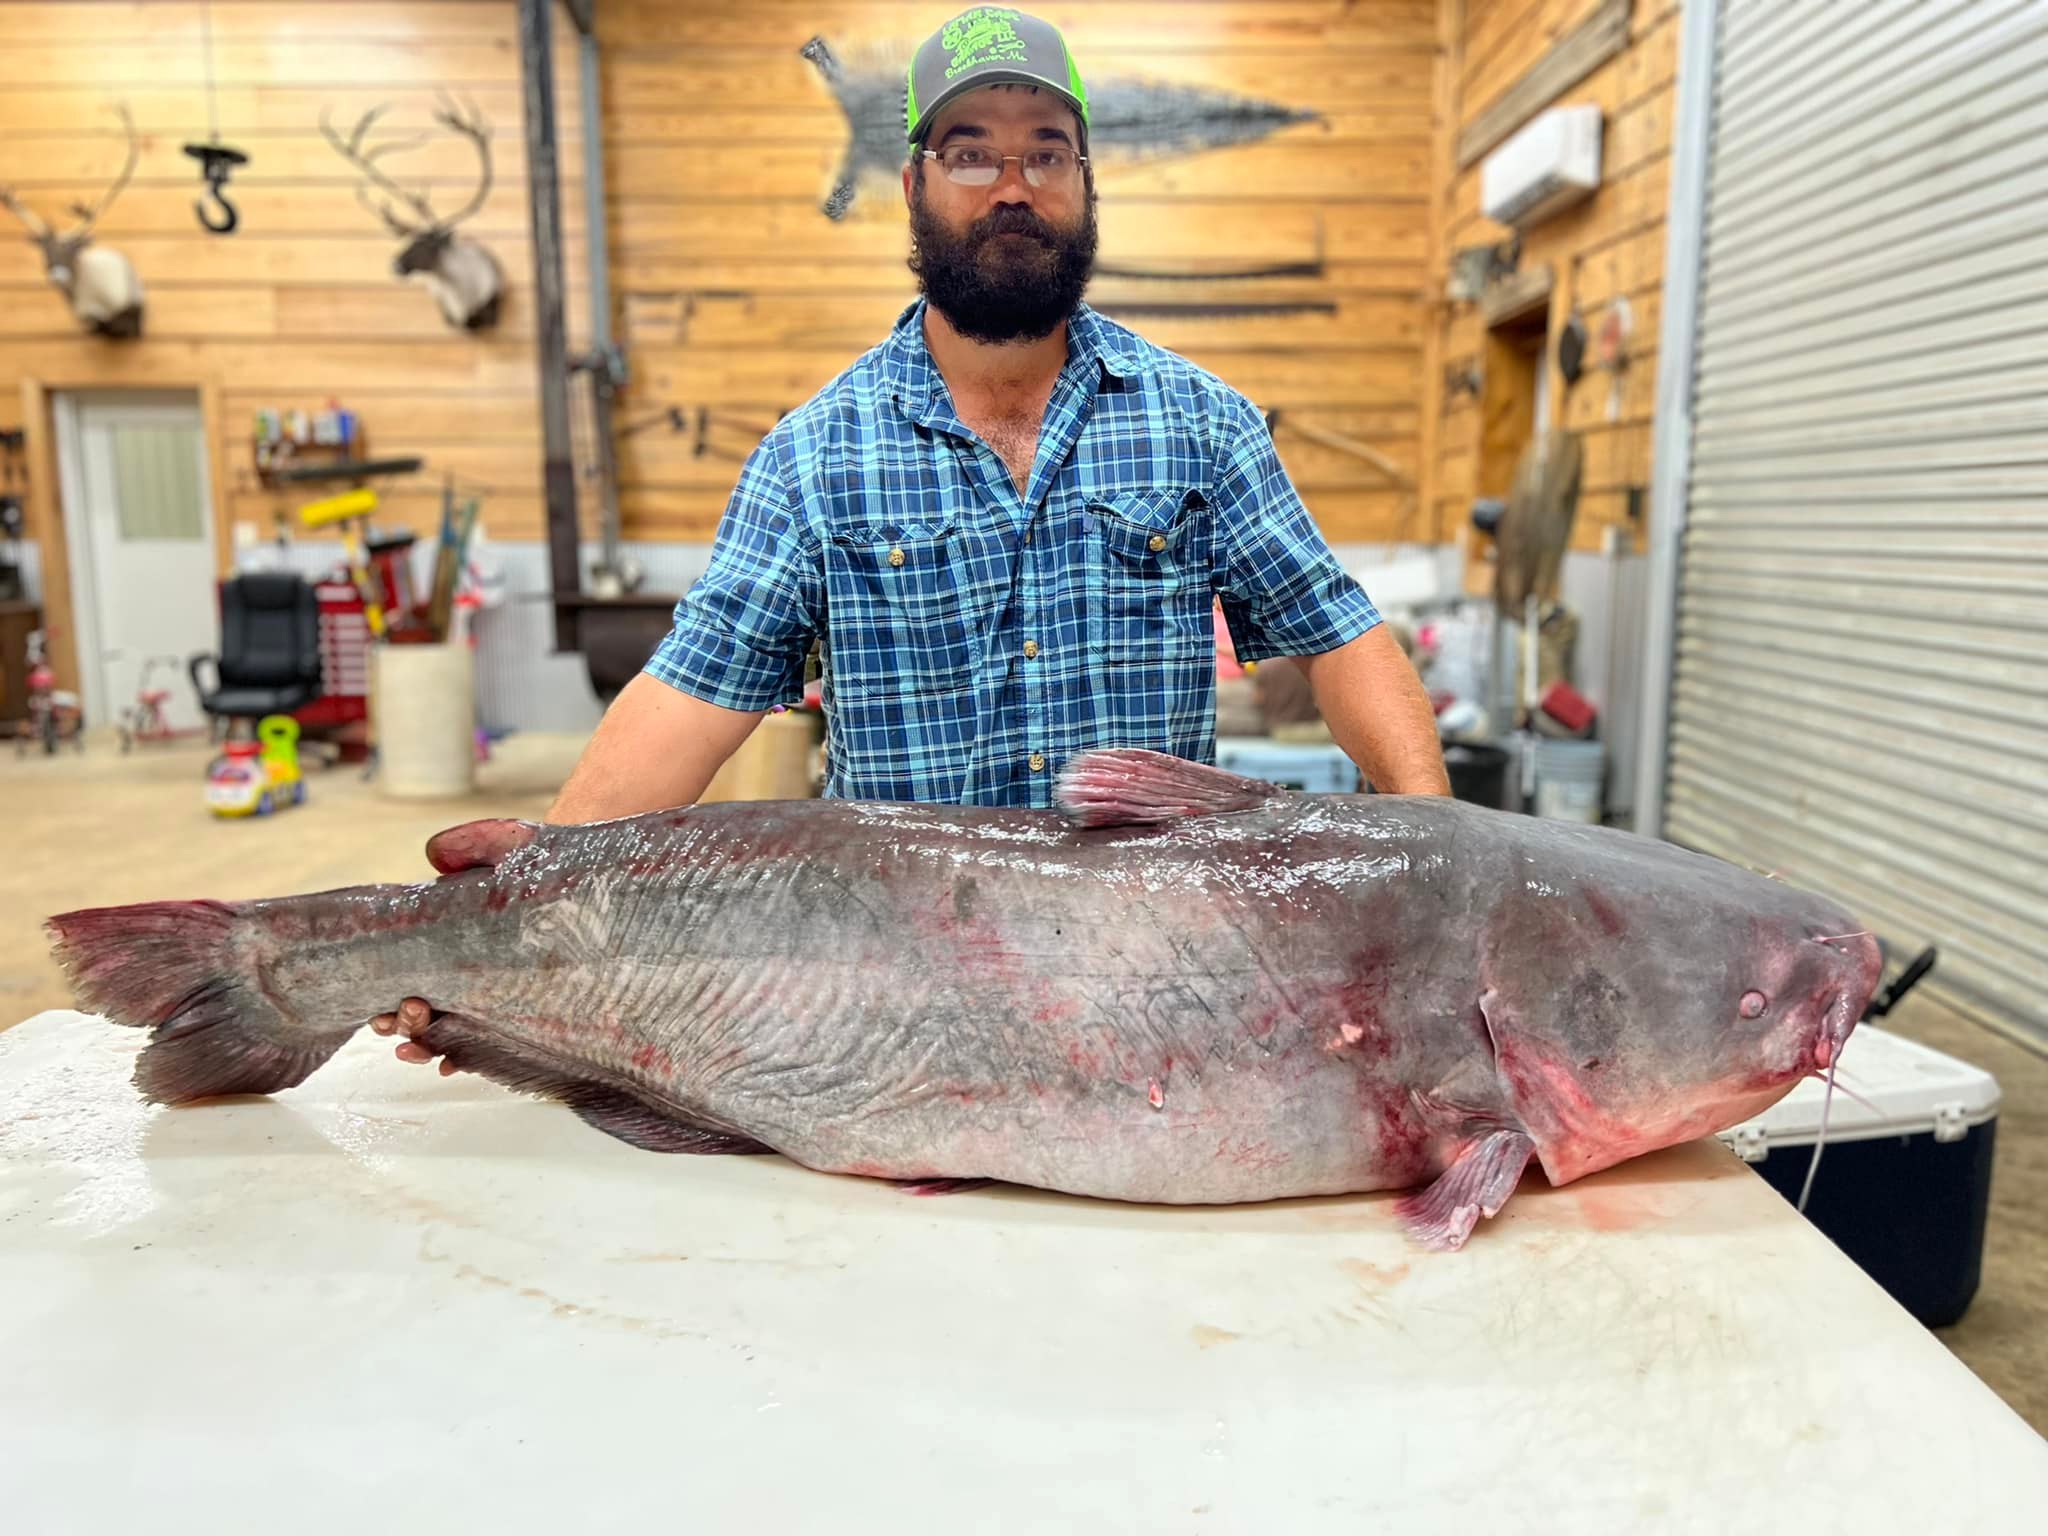 Giant Mississippi catfish